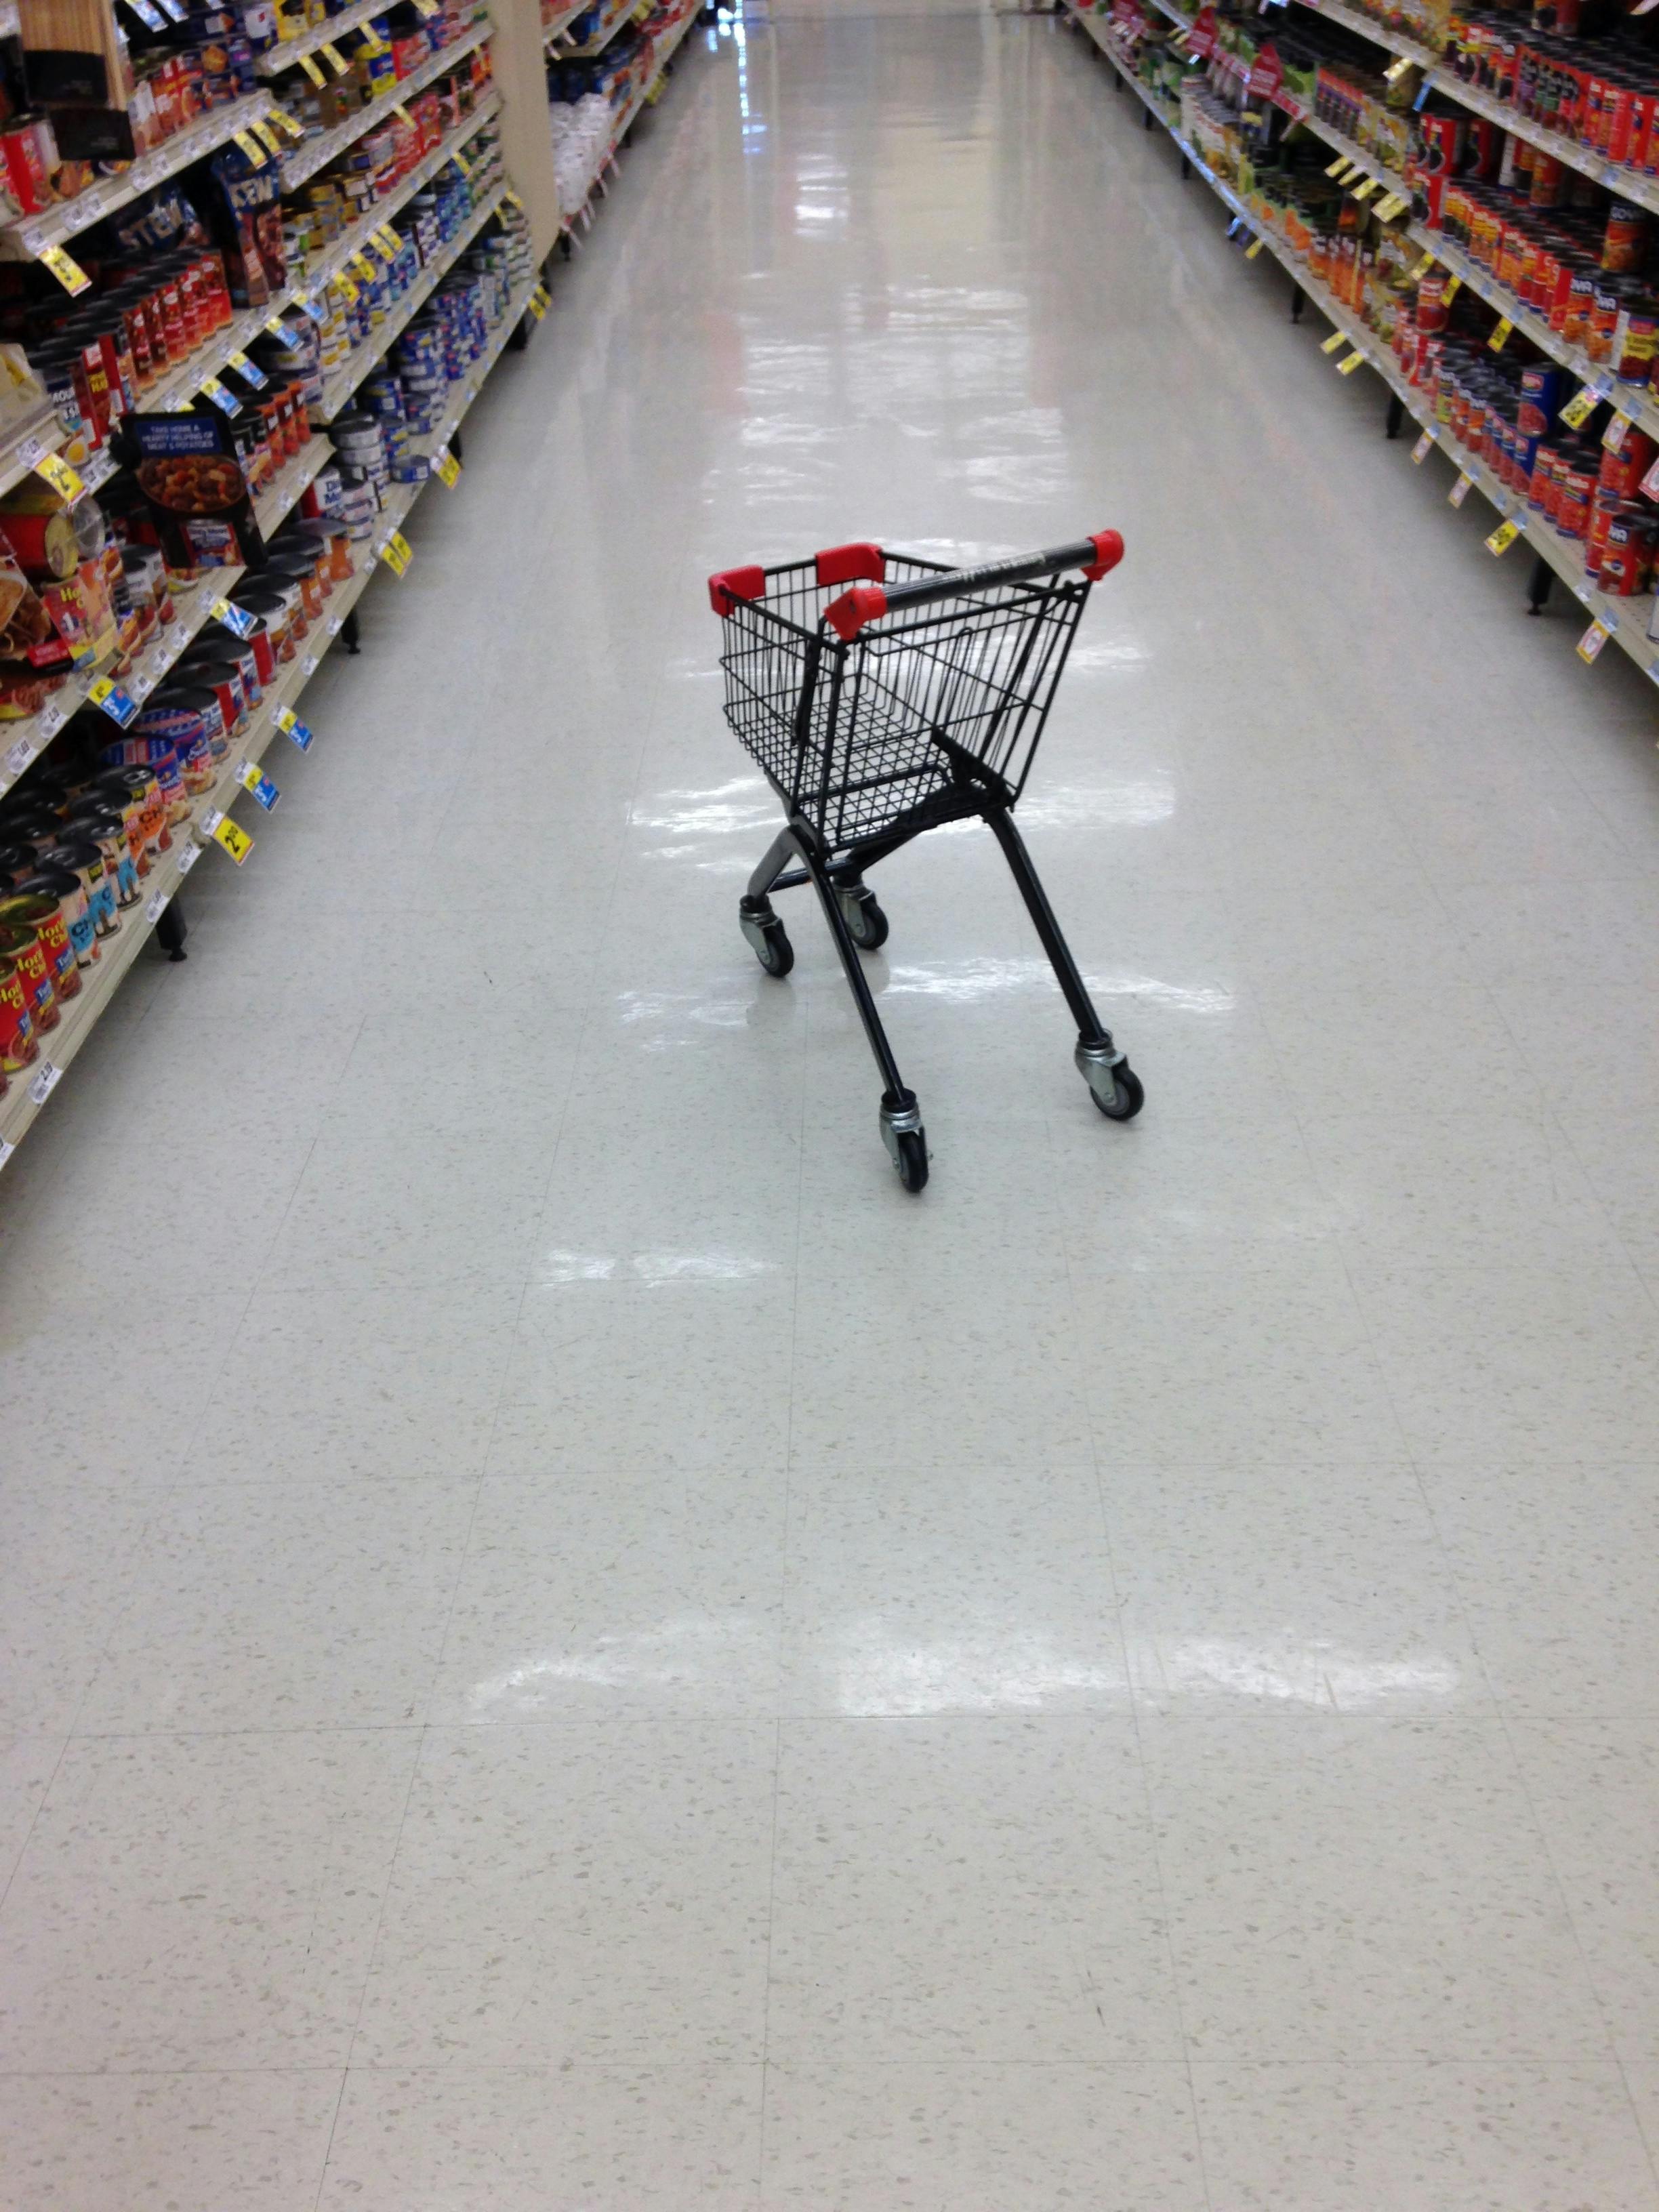 Free stock photo of minimalism, Shop less, Small cart